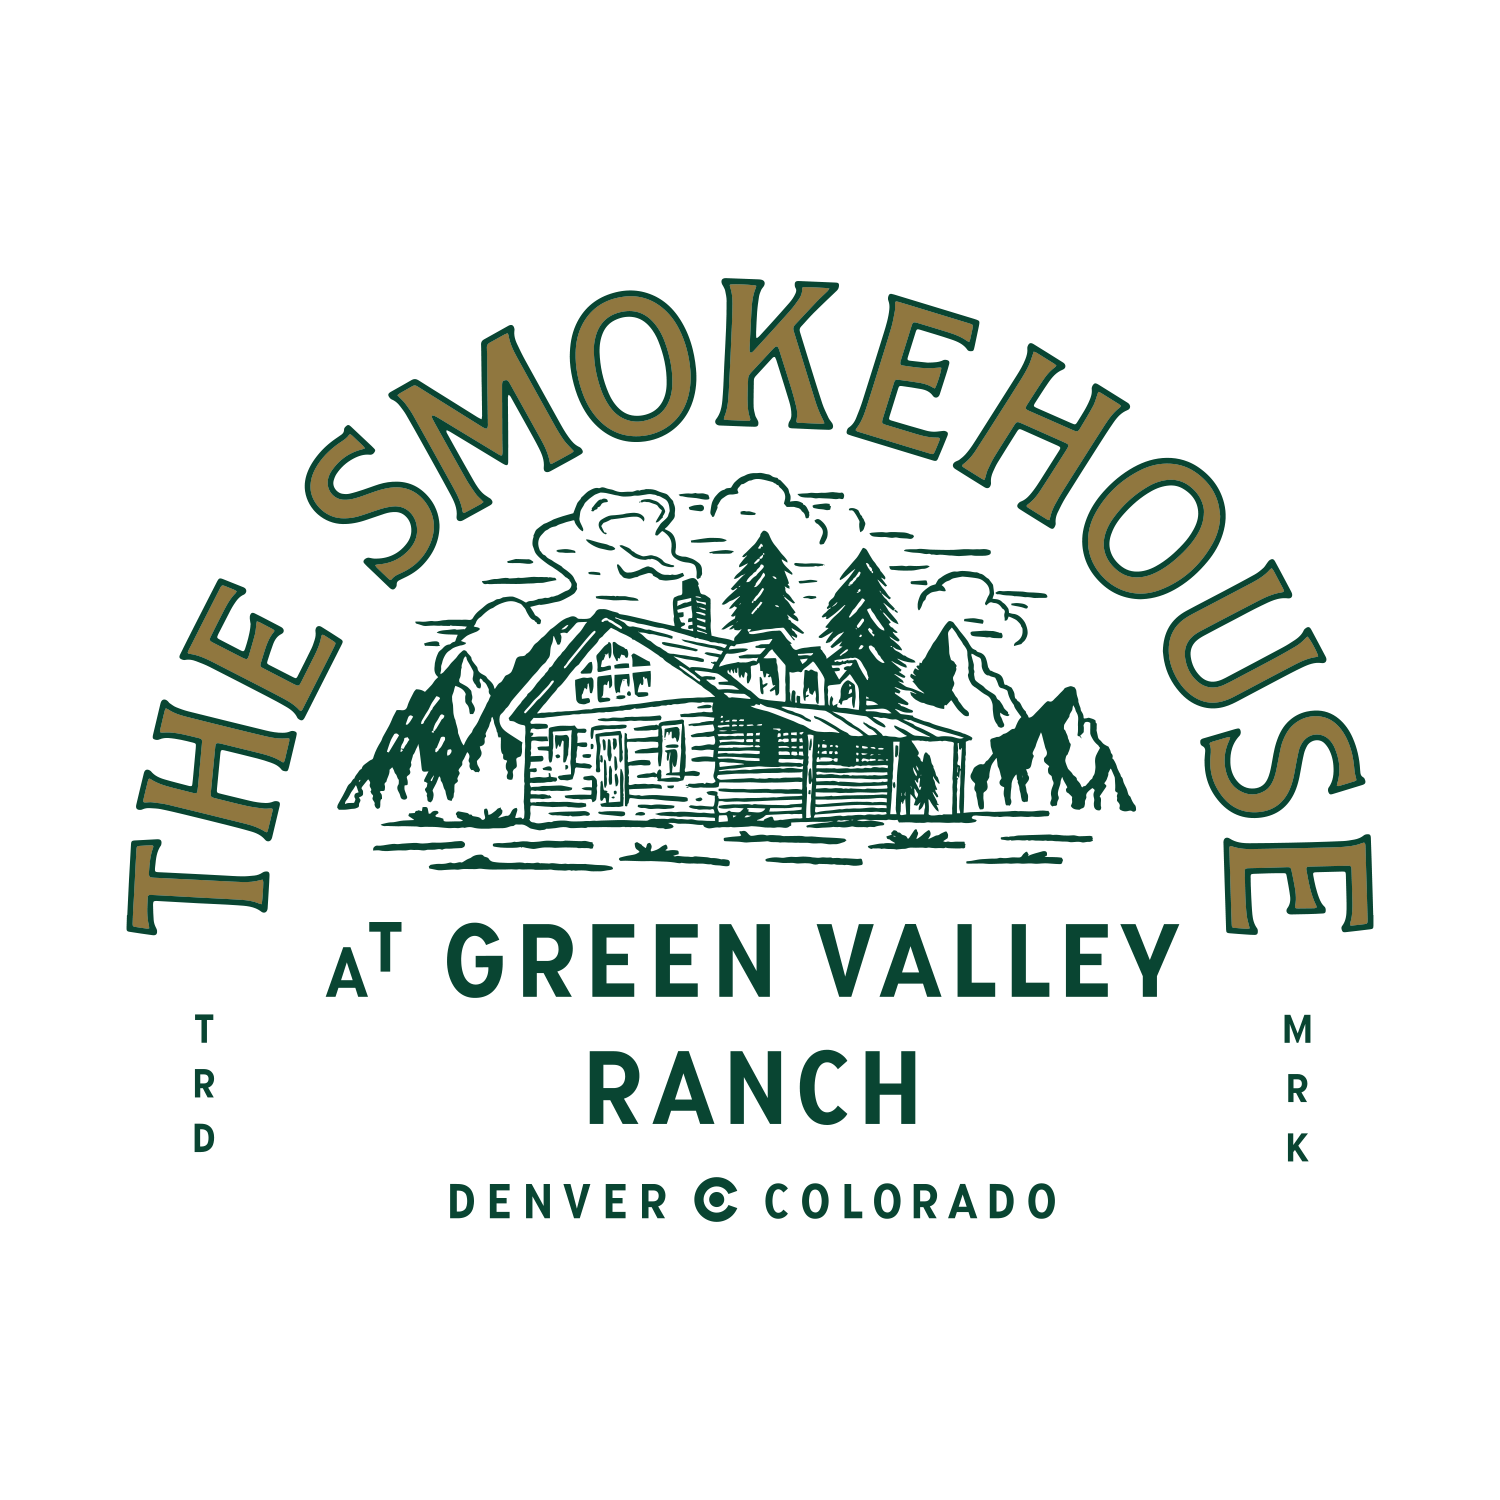 The Smokehouse at Green Valley Ranch